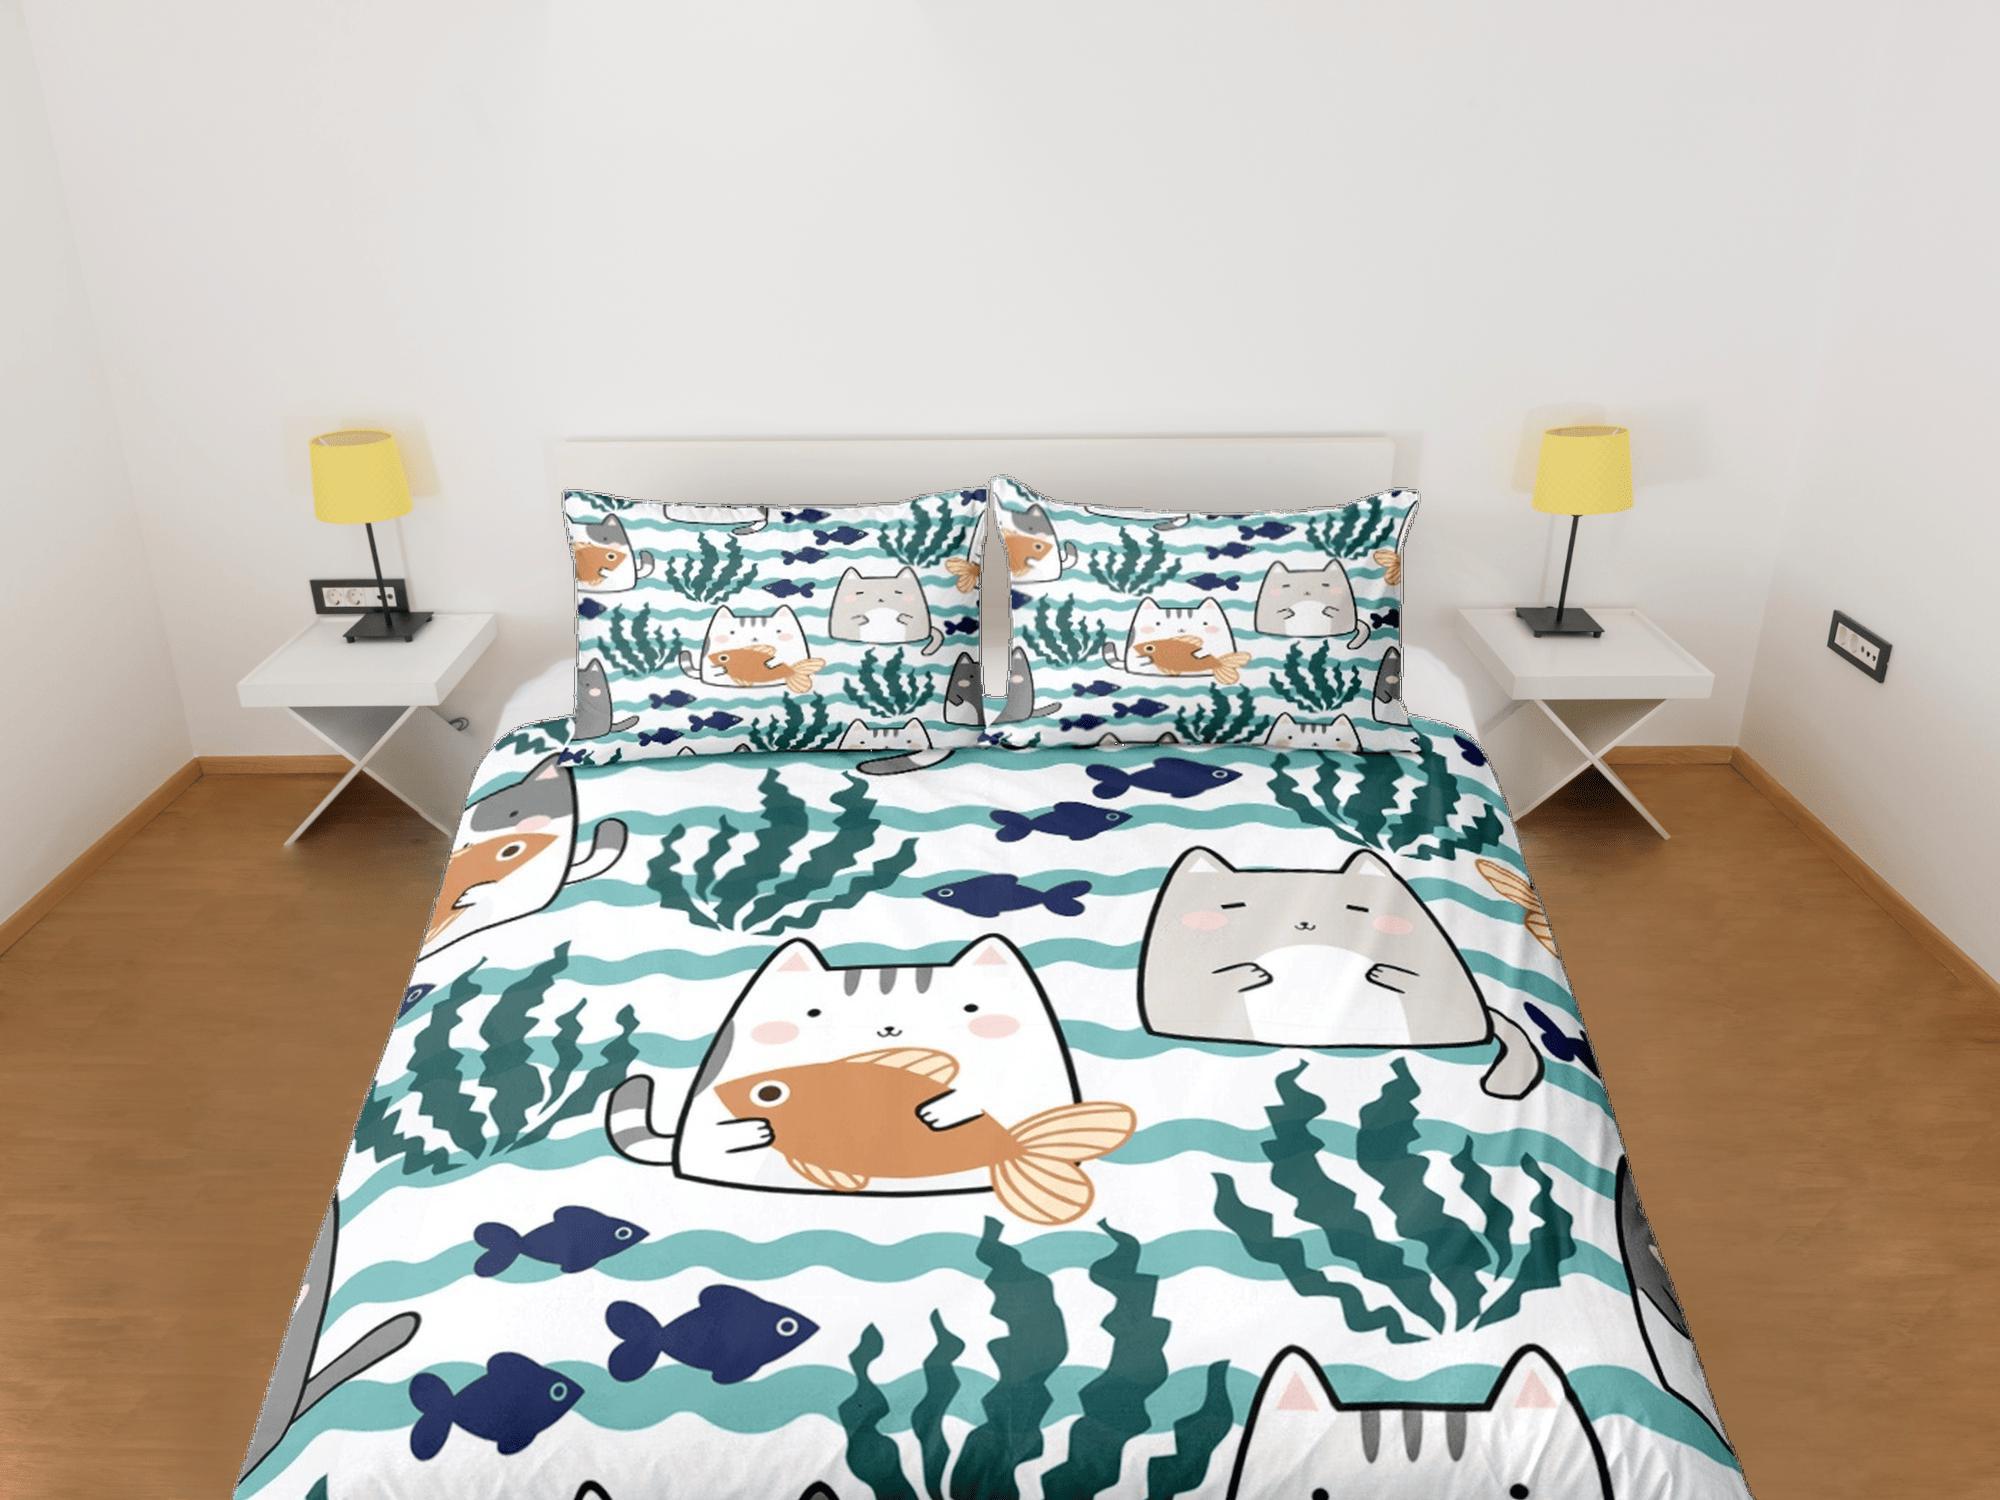 daintyduvet Cute Cats Sea Duvet Cover Set Bedspread Cat Lover Gift Bedding for Teens Kids Bedroom Comforter Cover